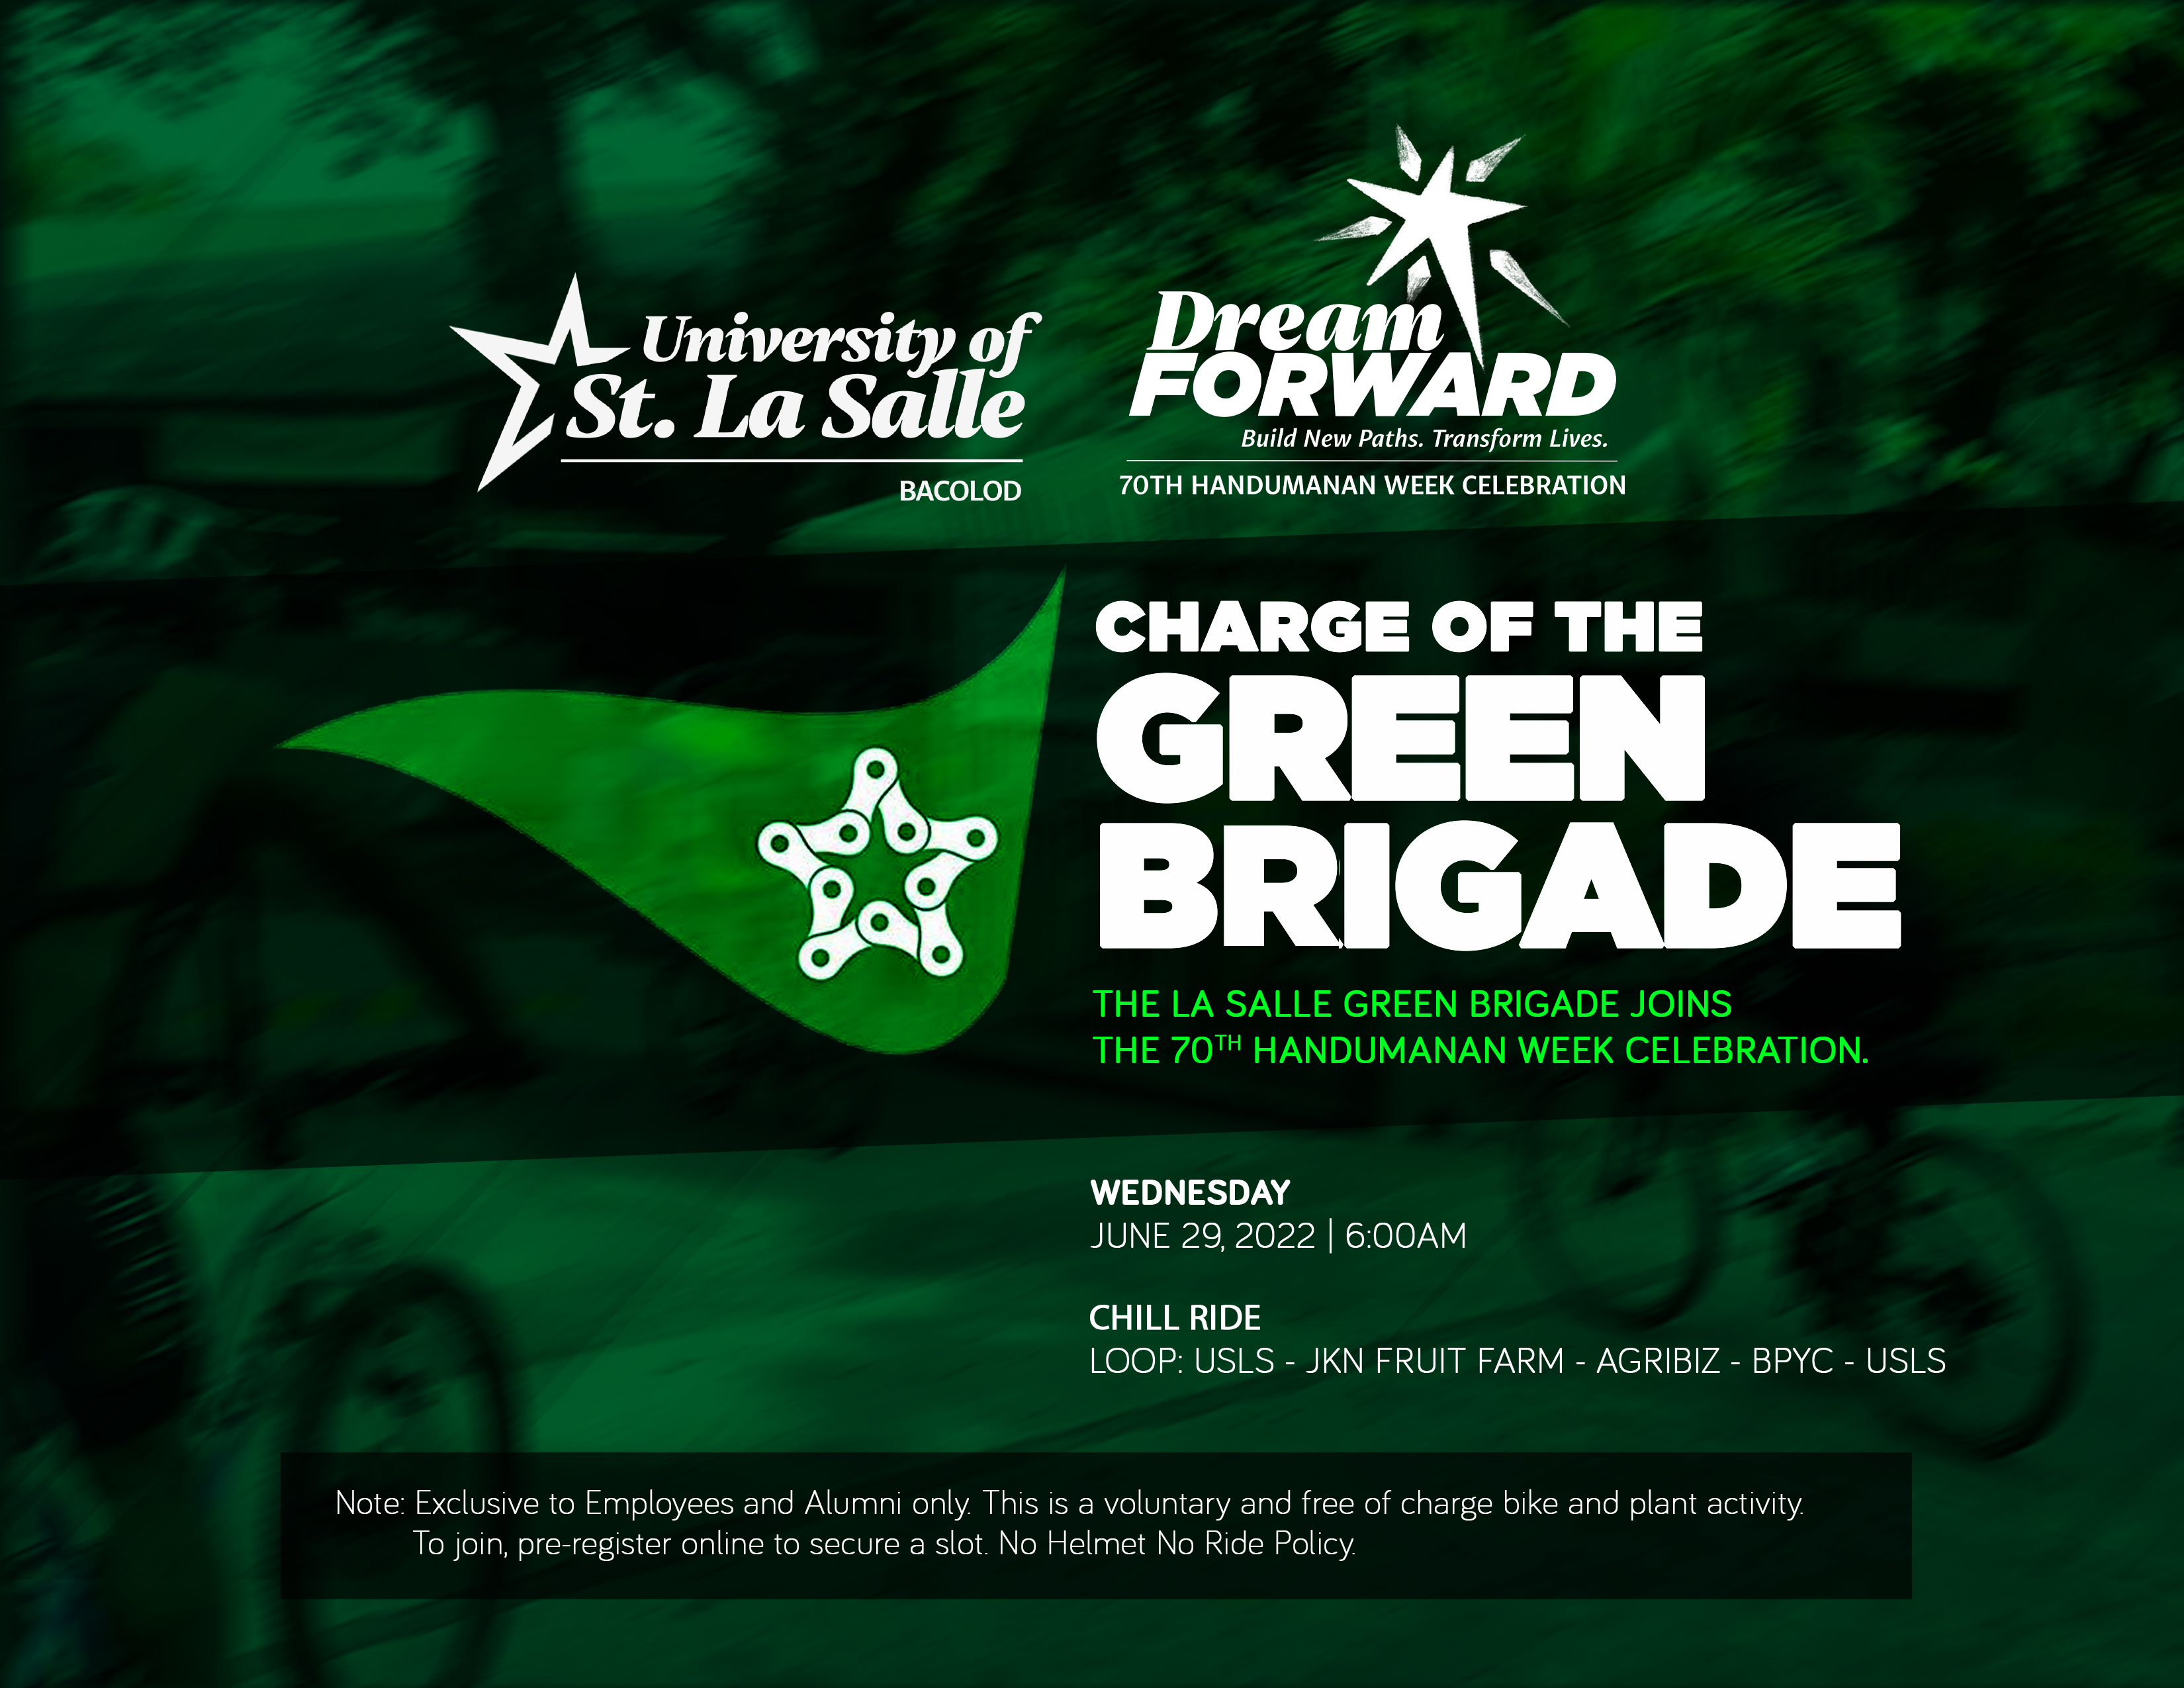 The-La-Salle-Green-Brigade-joins-the-70th-Handumanan-Week-Celebration.jpg